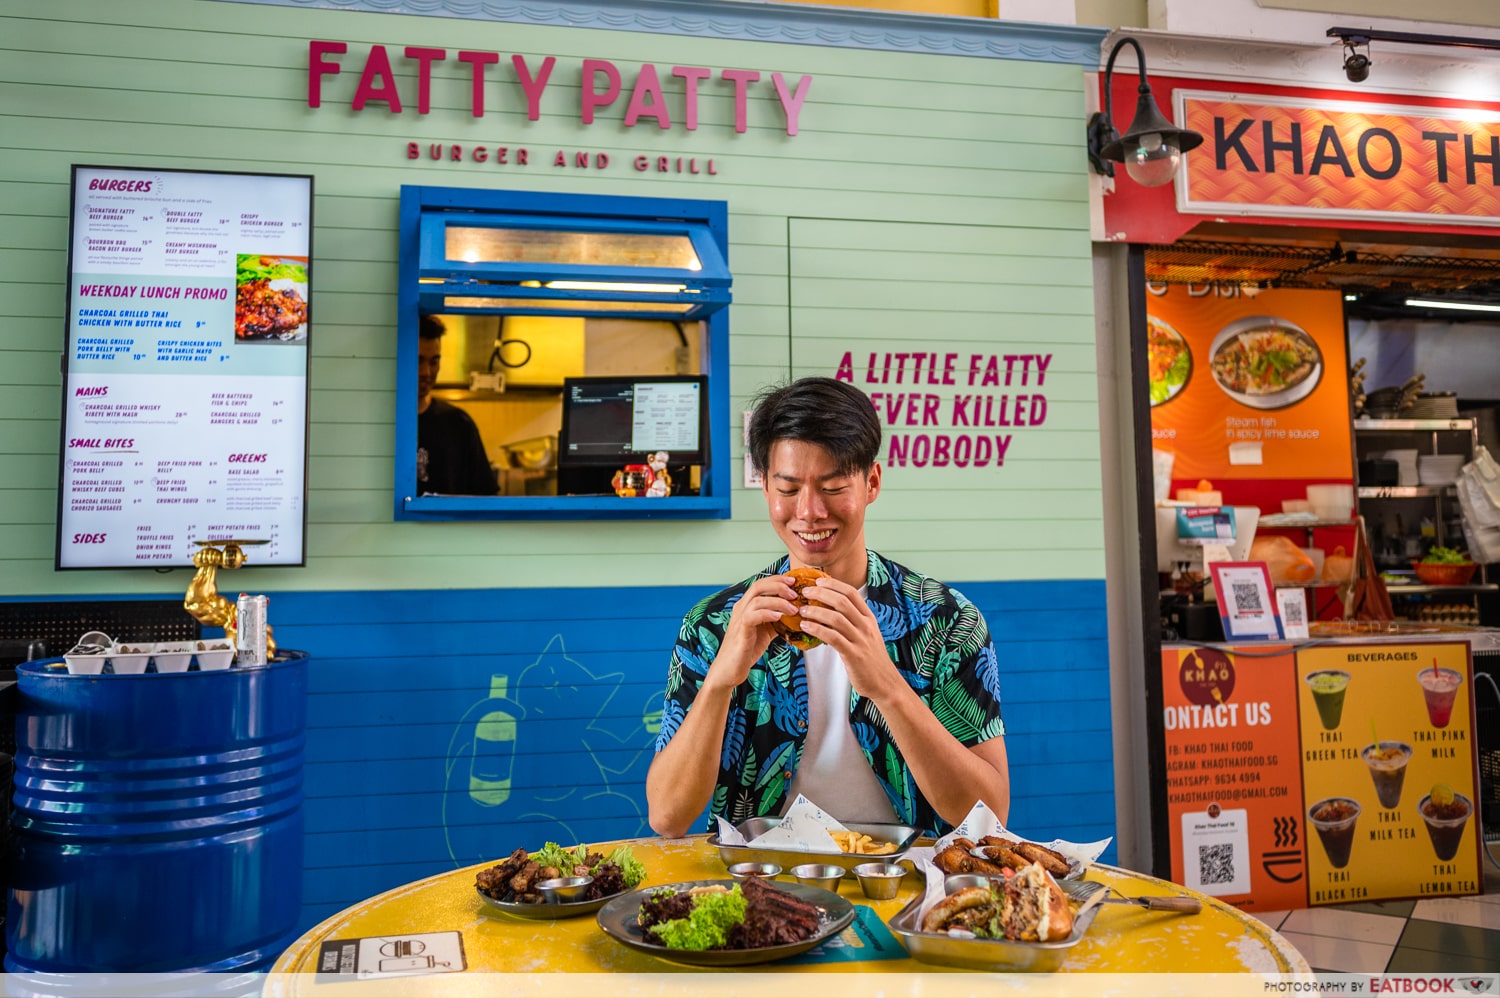 Fatty Patty Burger And Grill - beach boy slay